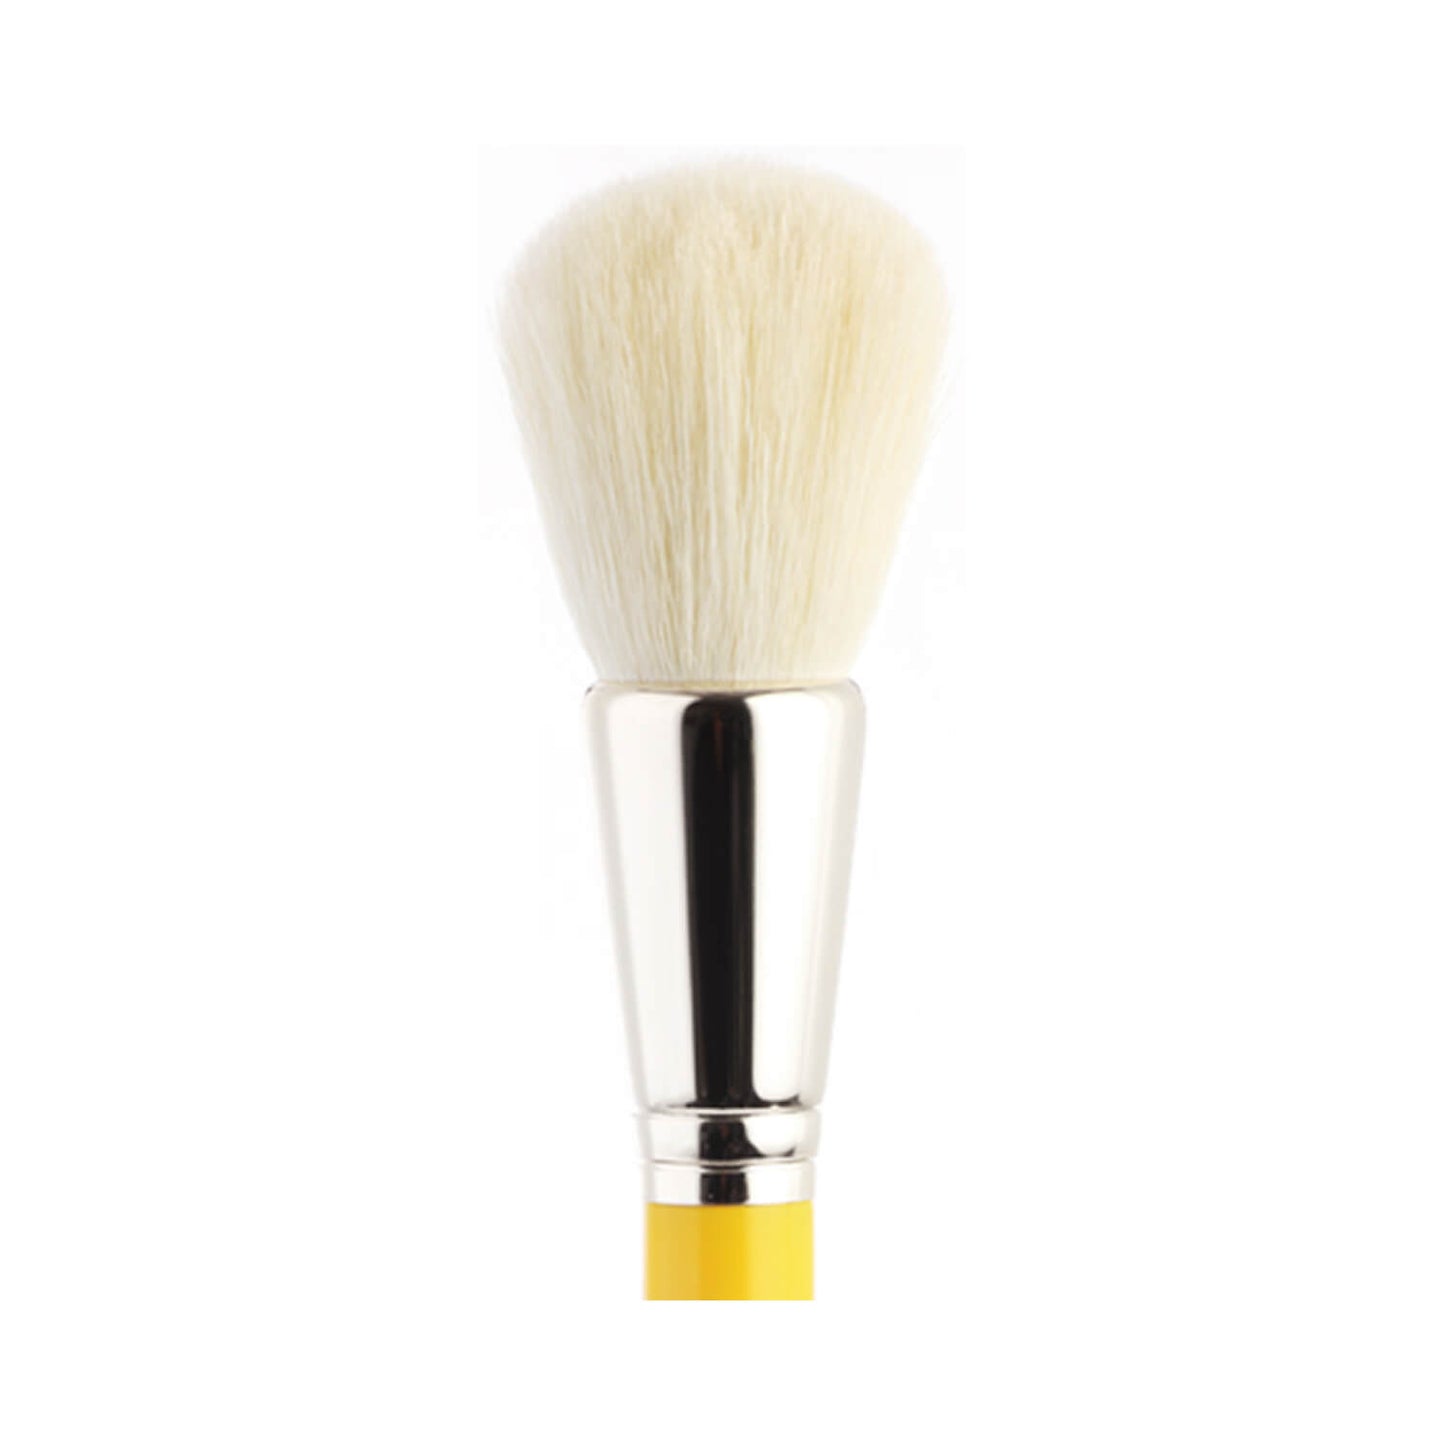 BDellium Tools Studio Line 959 Powder Blending Brush Yellow Head